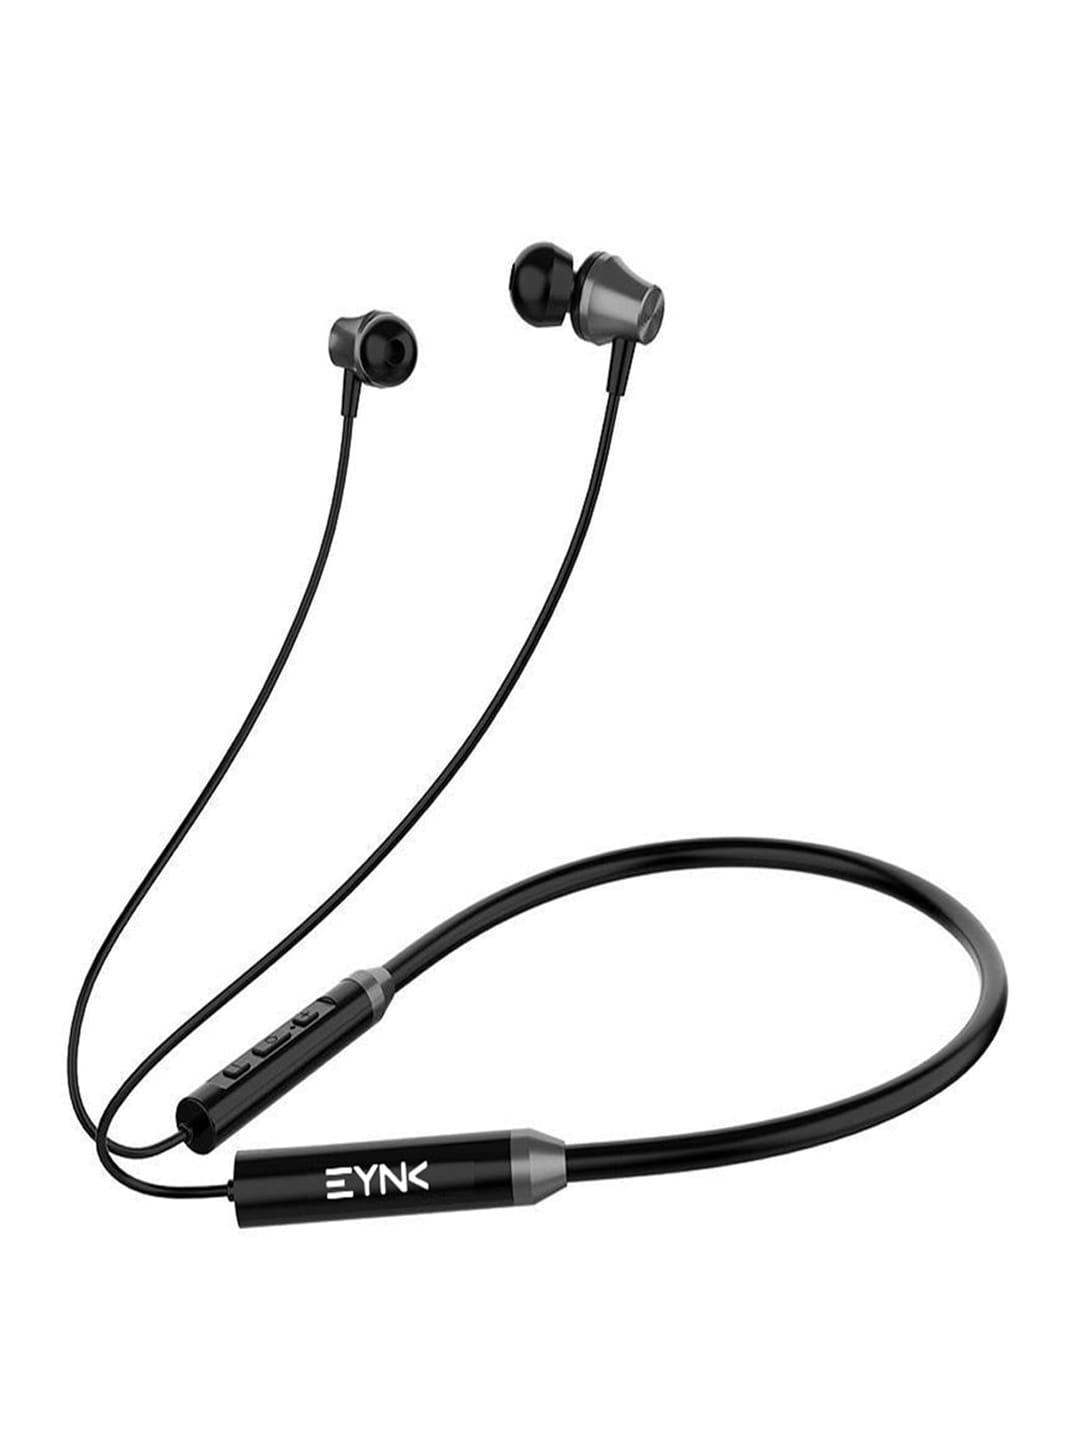 EYNK Unisex Black Headphones Price in India